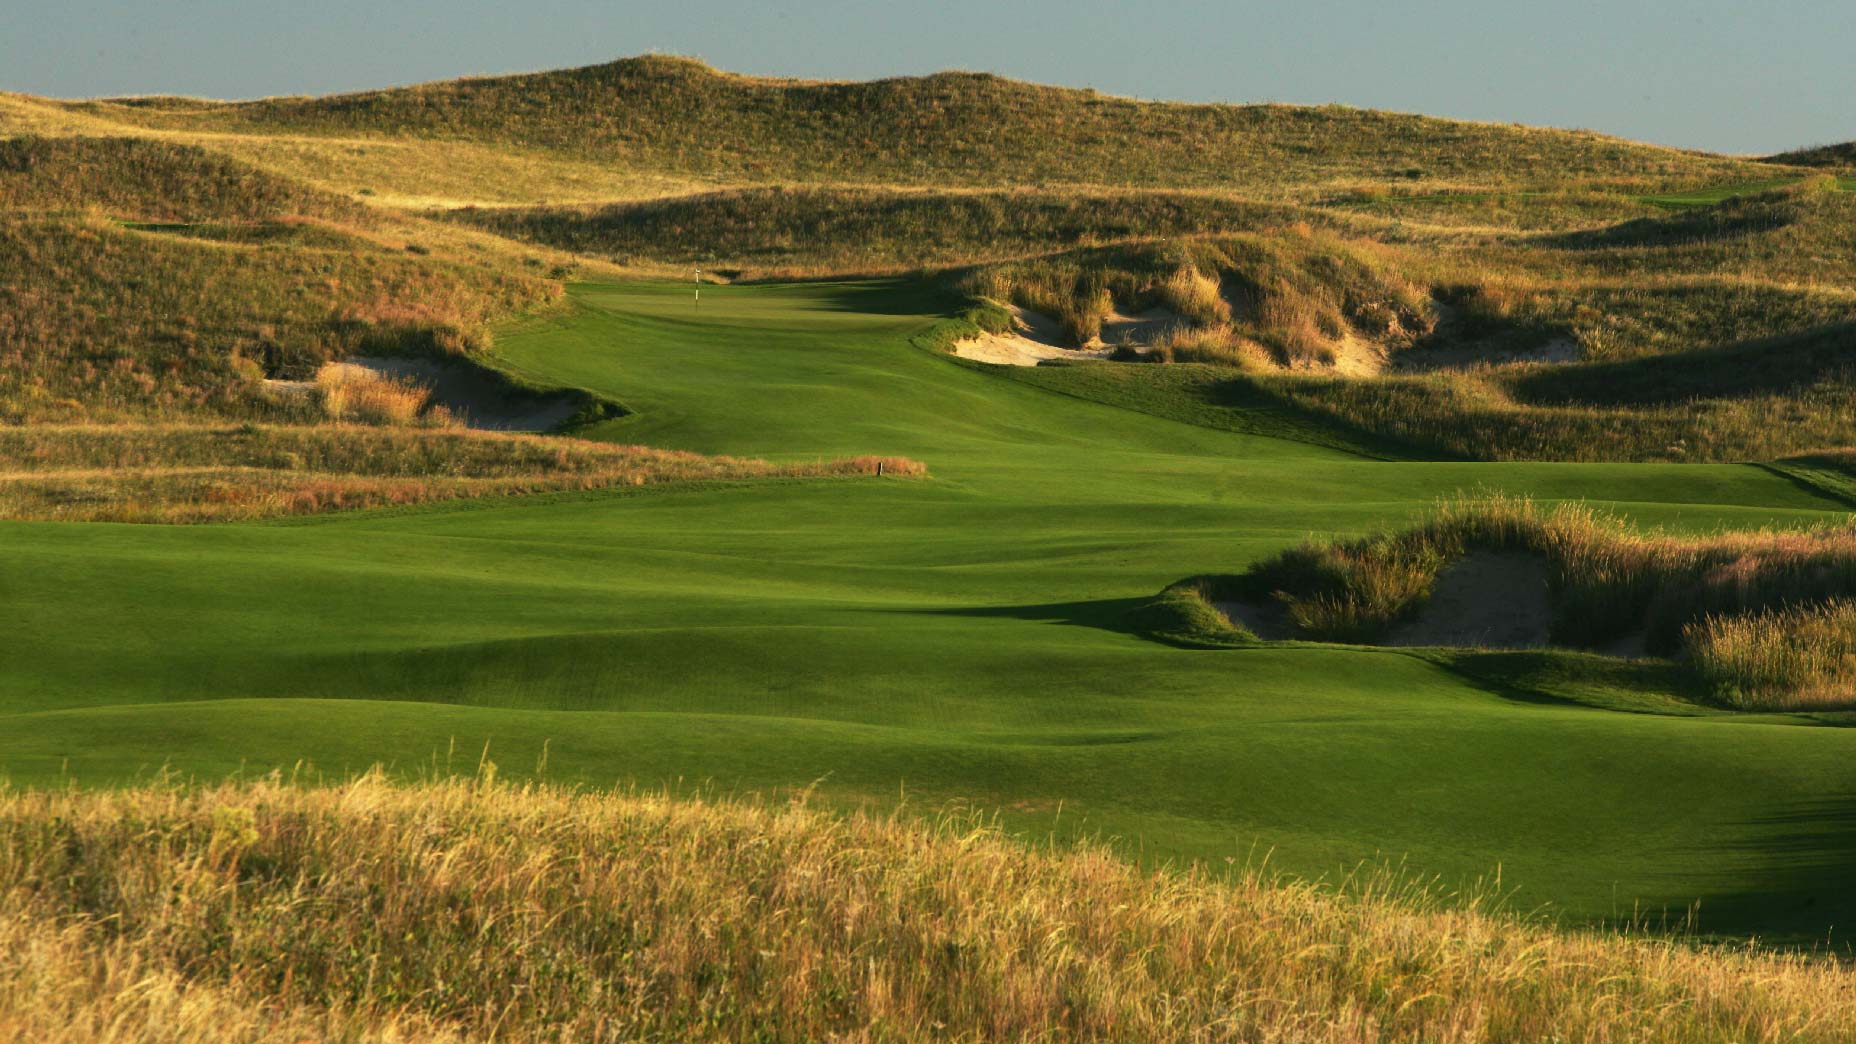 The 1st hole at Sand Hills Golf Club in Nebraska